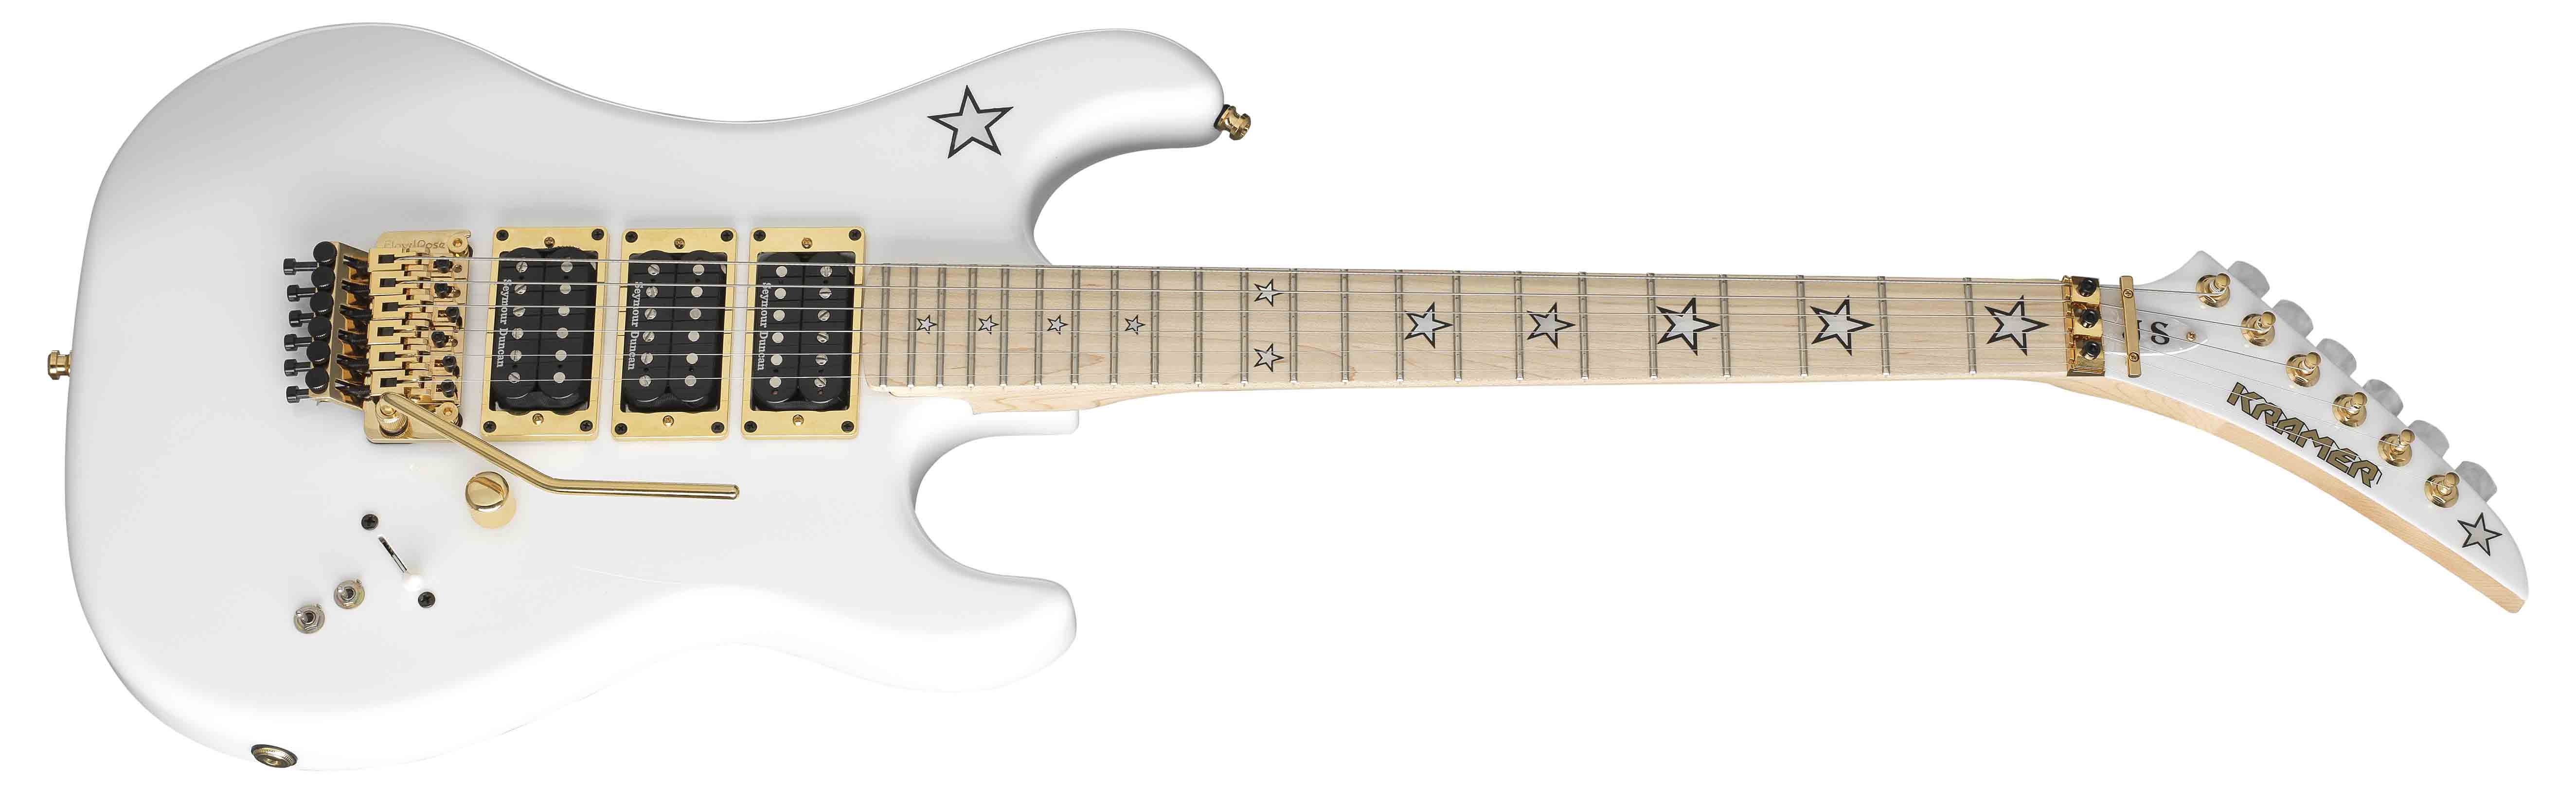 Kramer Guitars Jersey Star Alpine White | MUSIC STORE professional